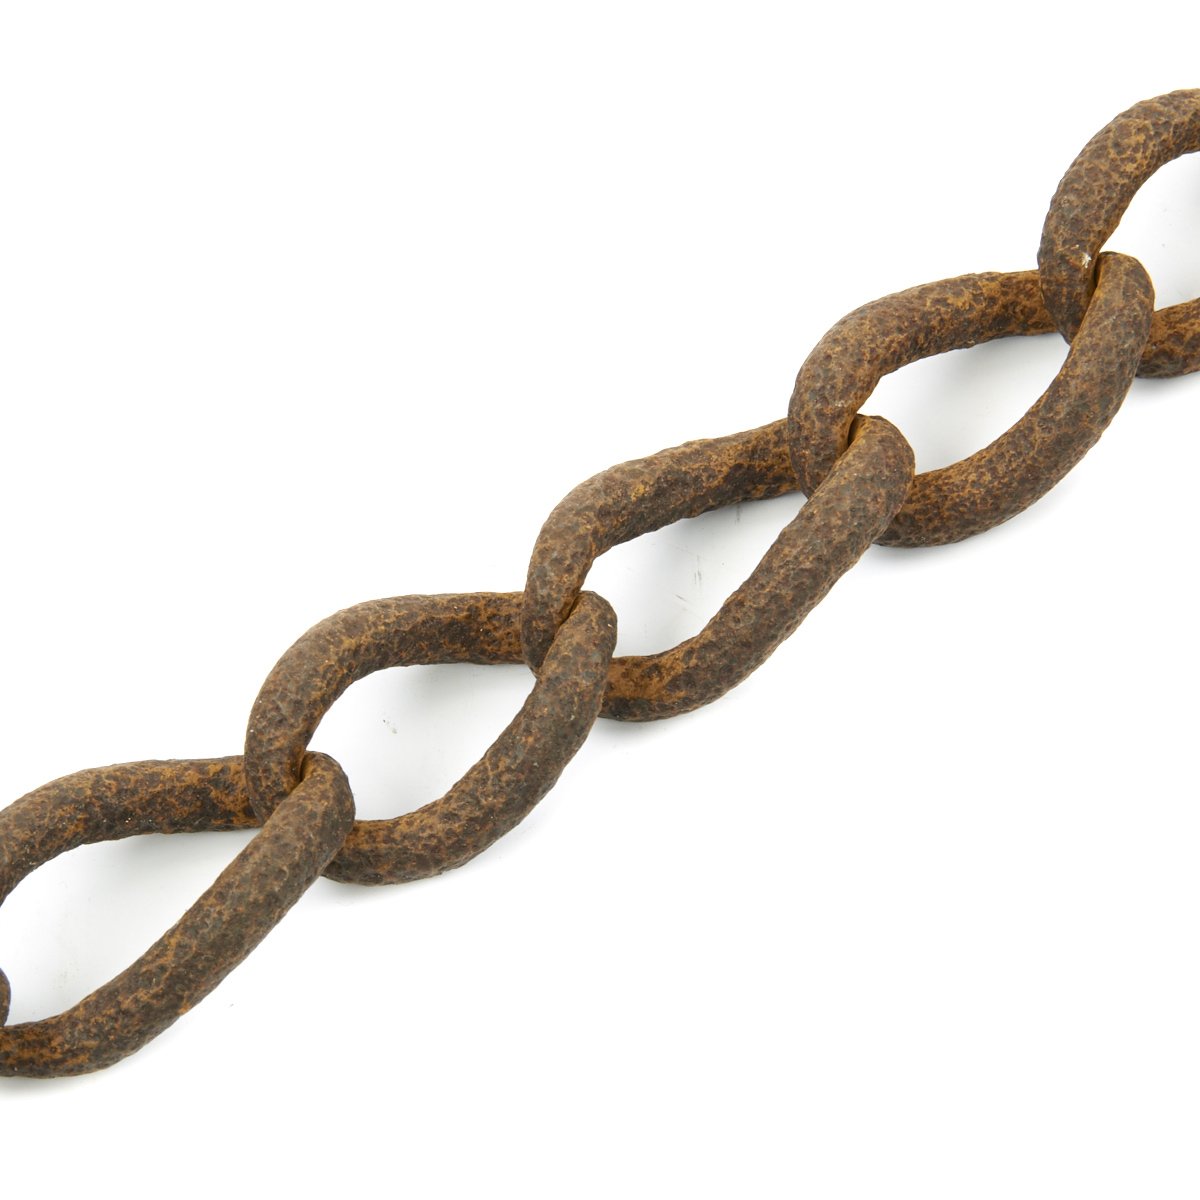 Wrought Iron Chain